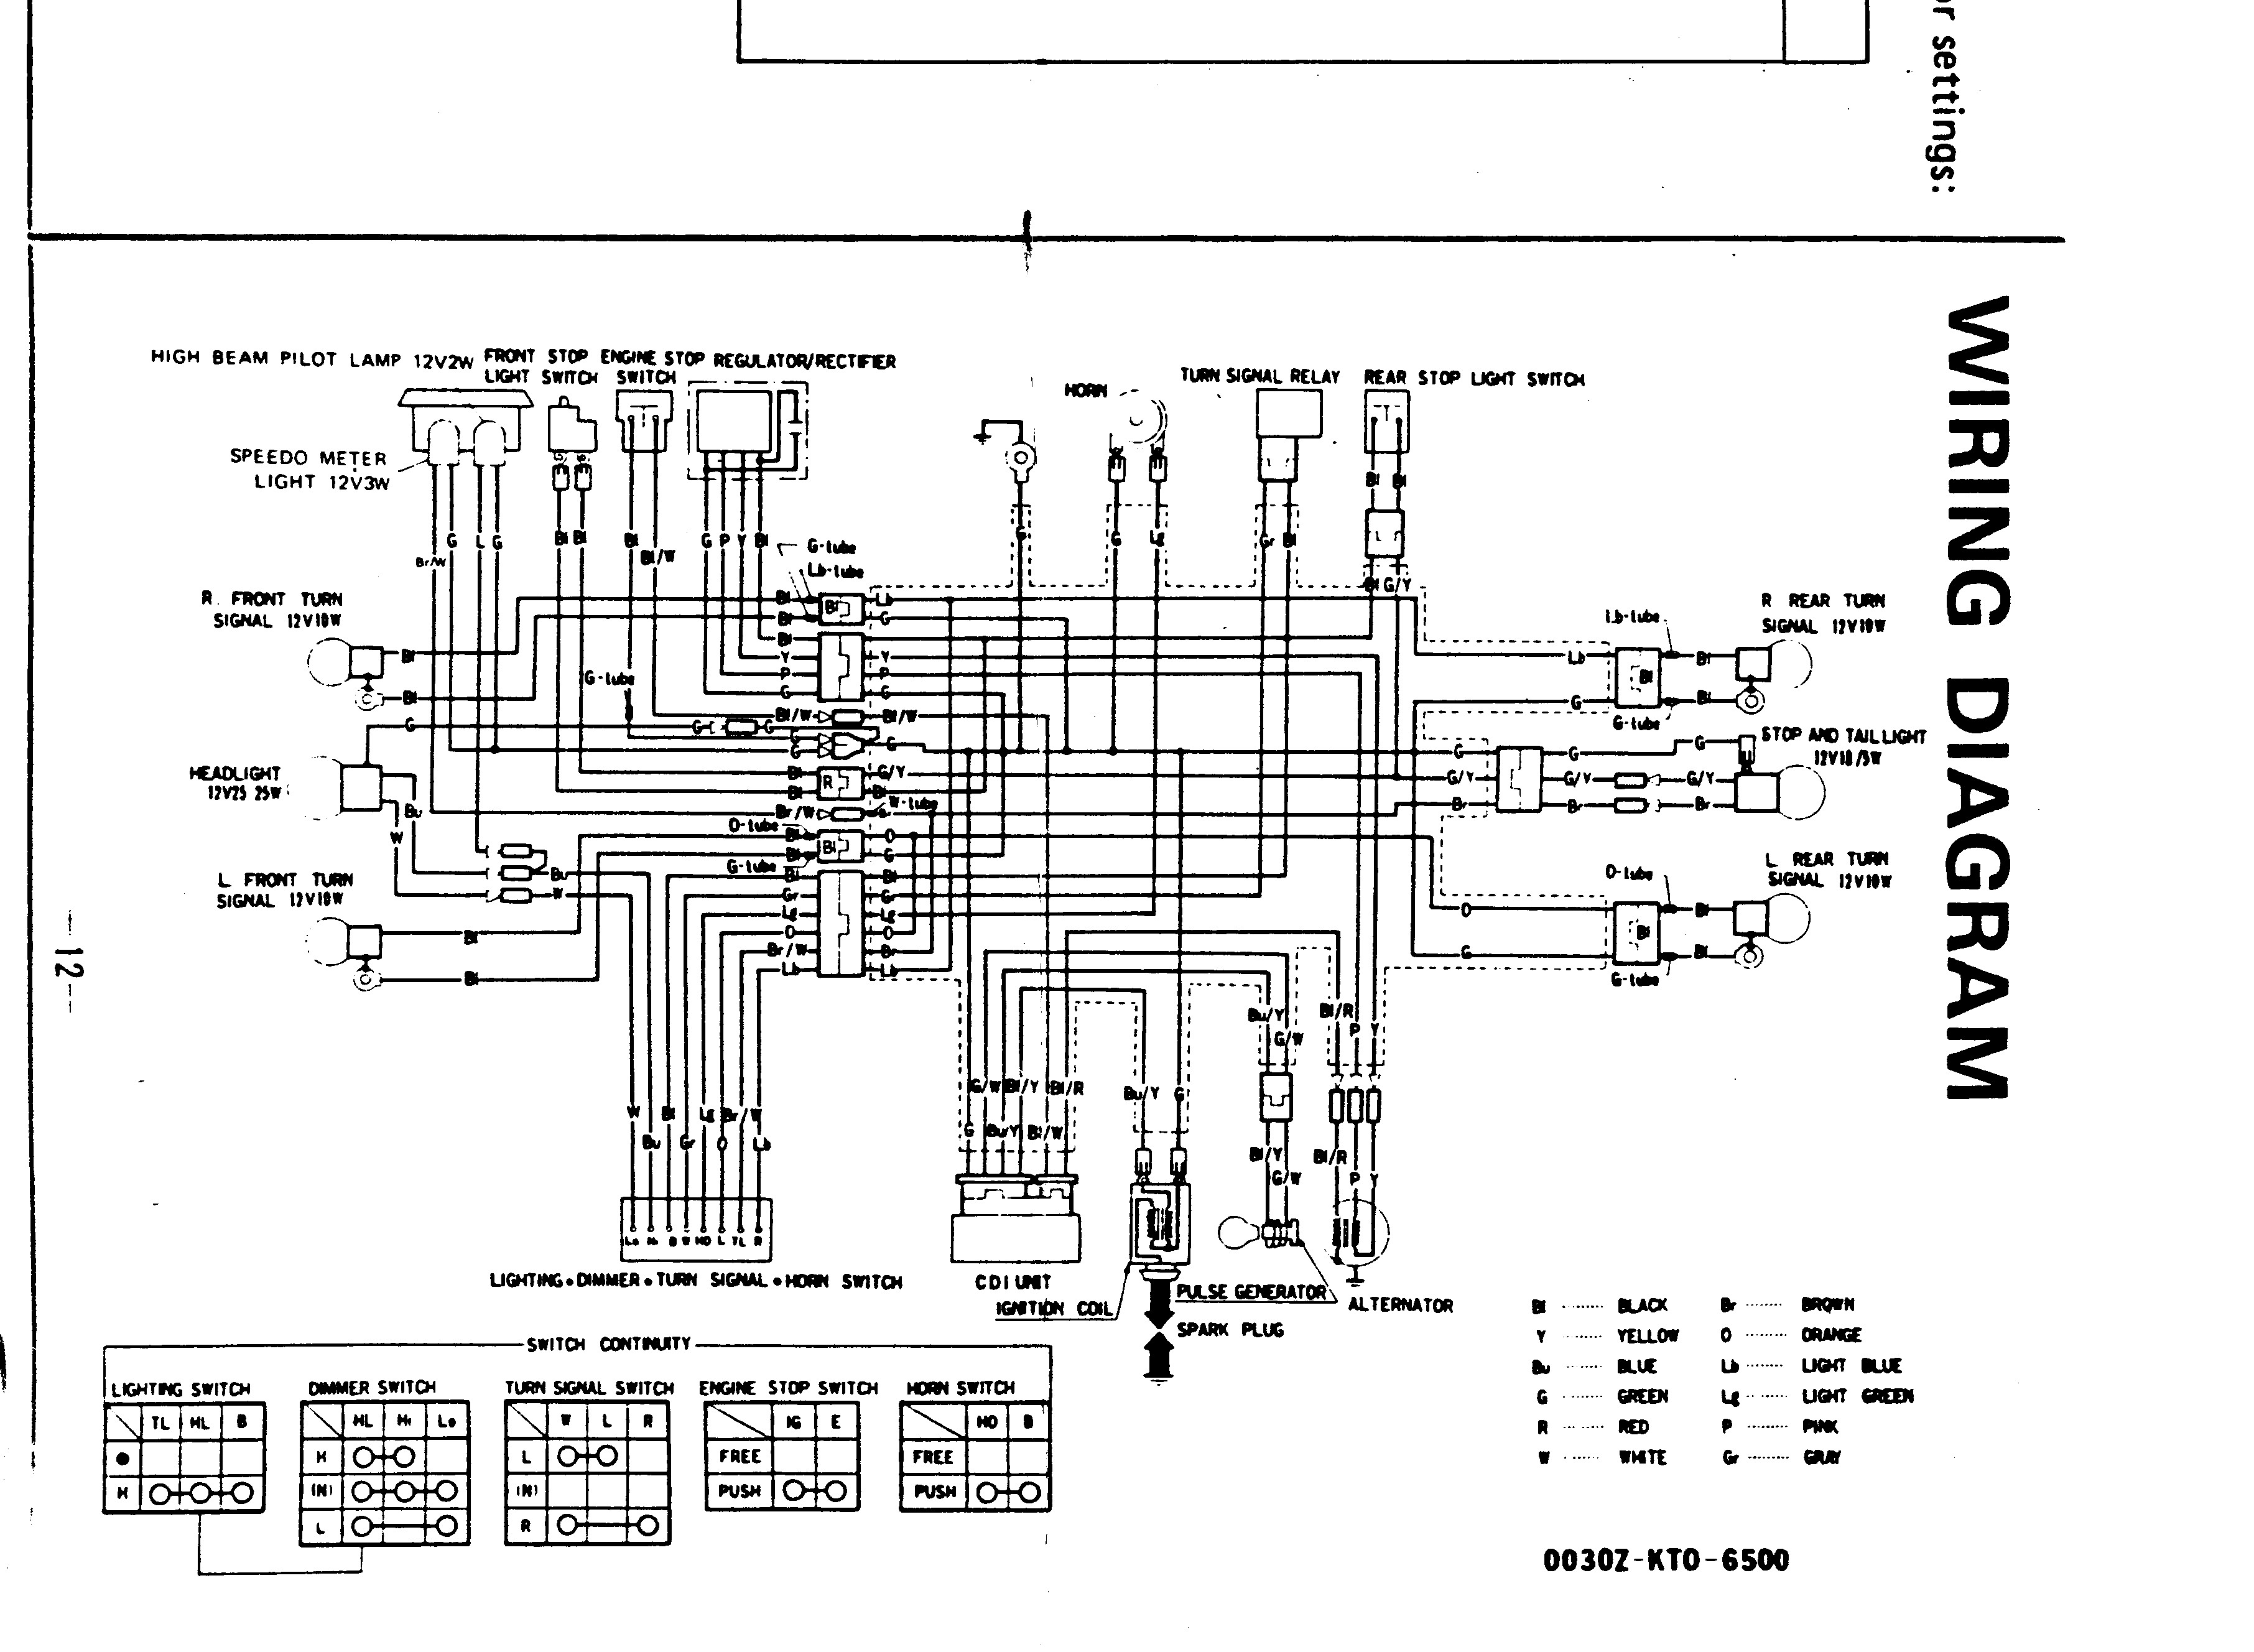 Honda Small Engine Diagram Honda Xr250r Wiring Diagram Honda Wiring Diagrams Instructions Of Honda Small Engine Diagram